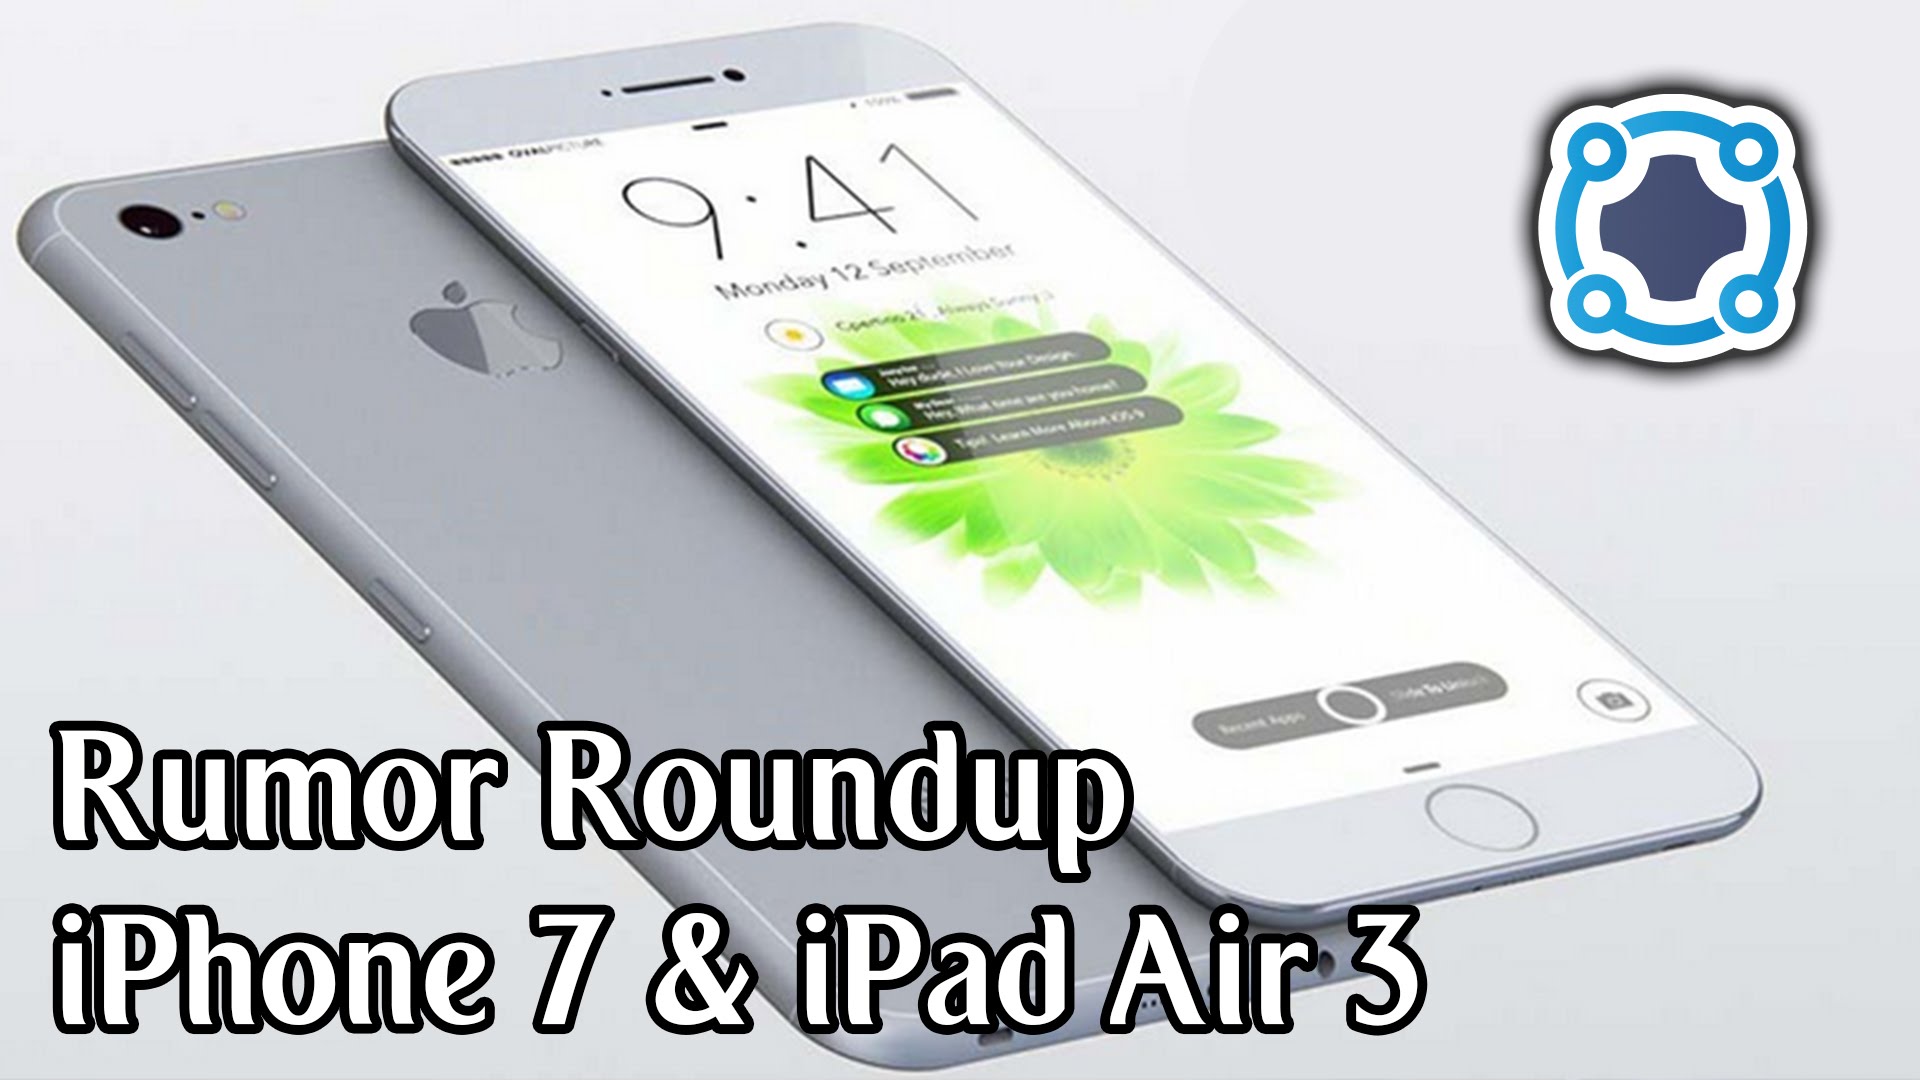 iPhone 7, iPad Air 3, Apple Watch - Rumor Roundup